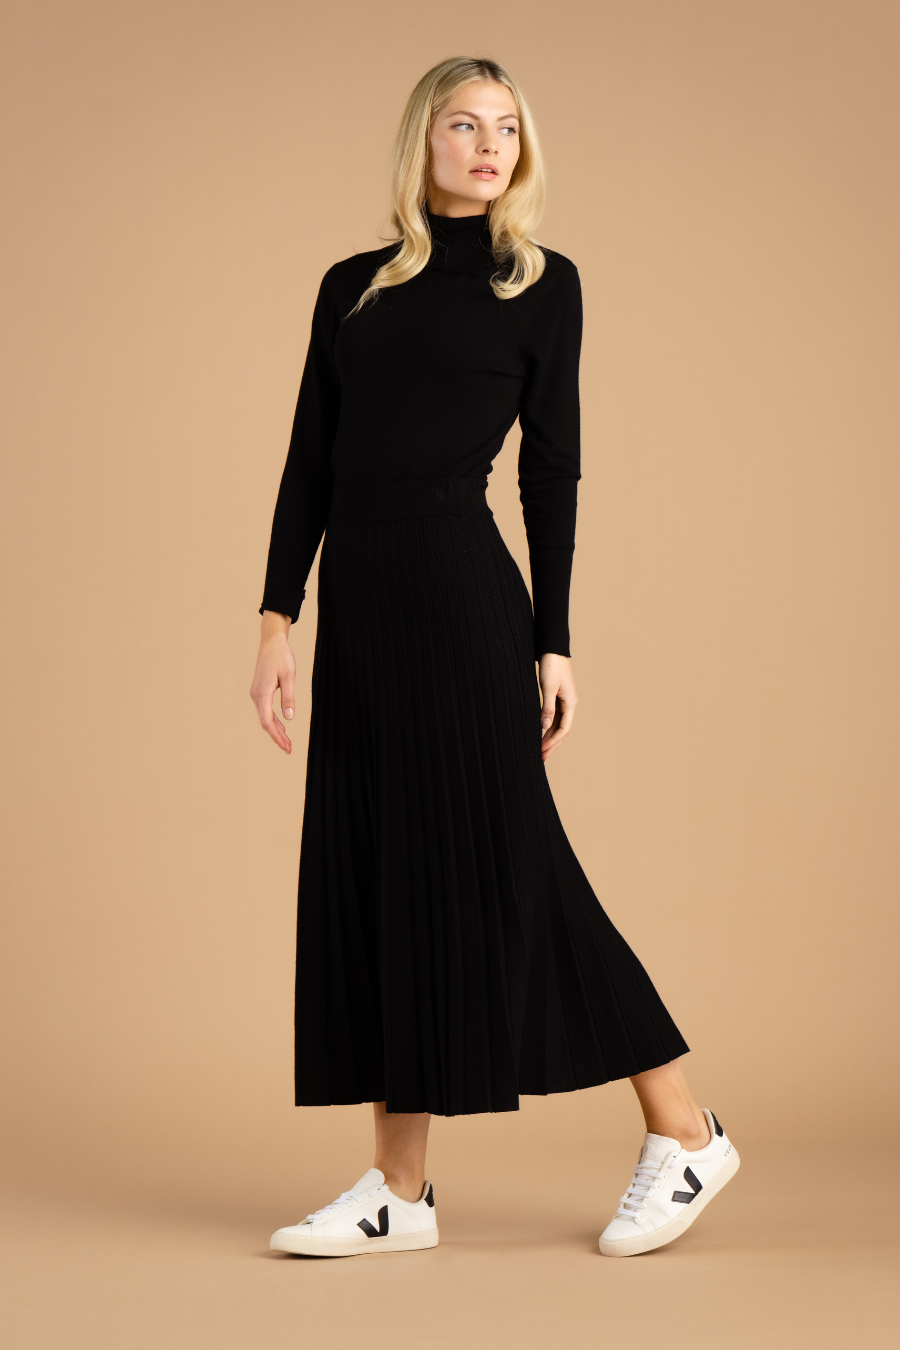 Black Pleated A-line Skirt